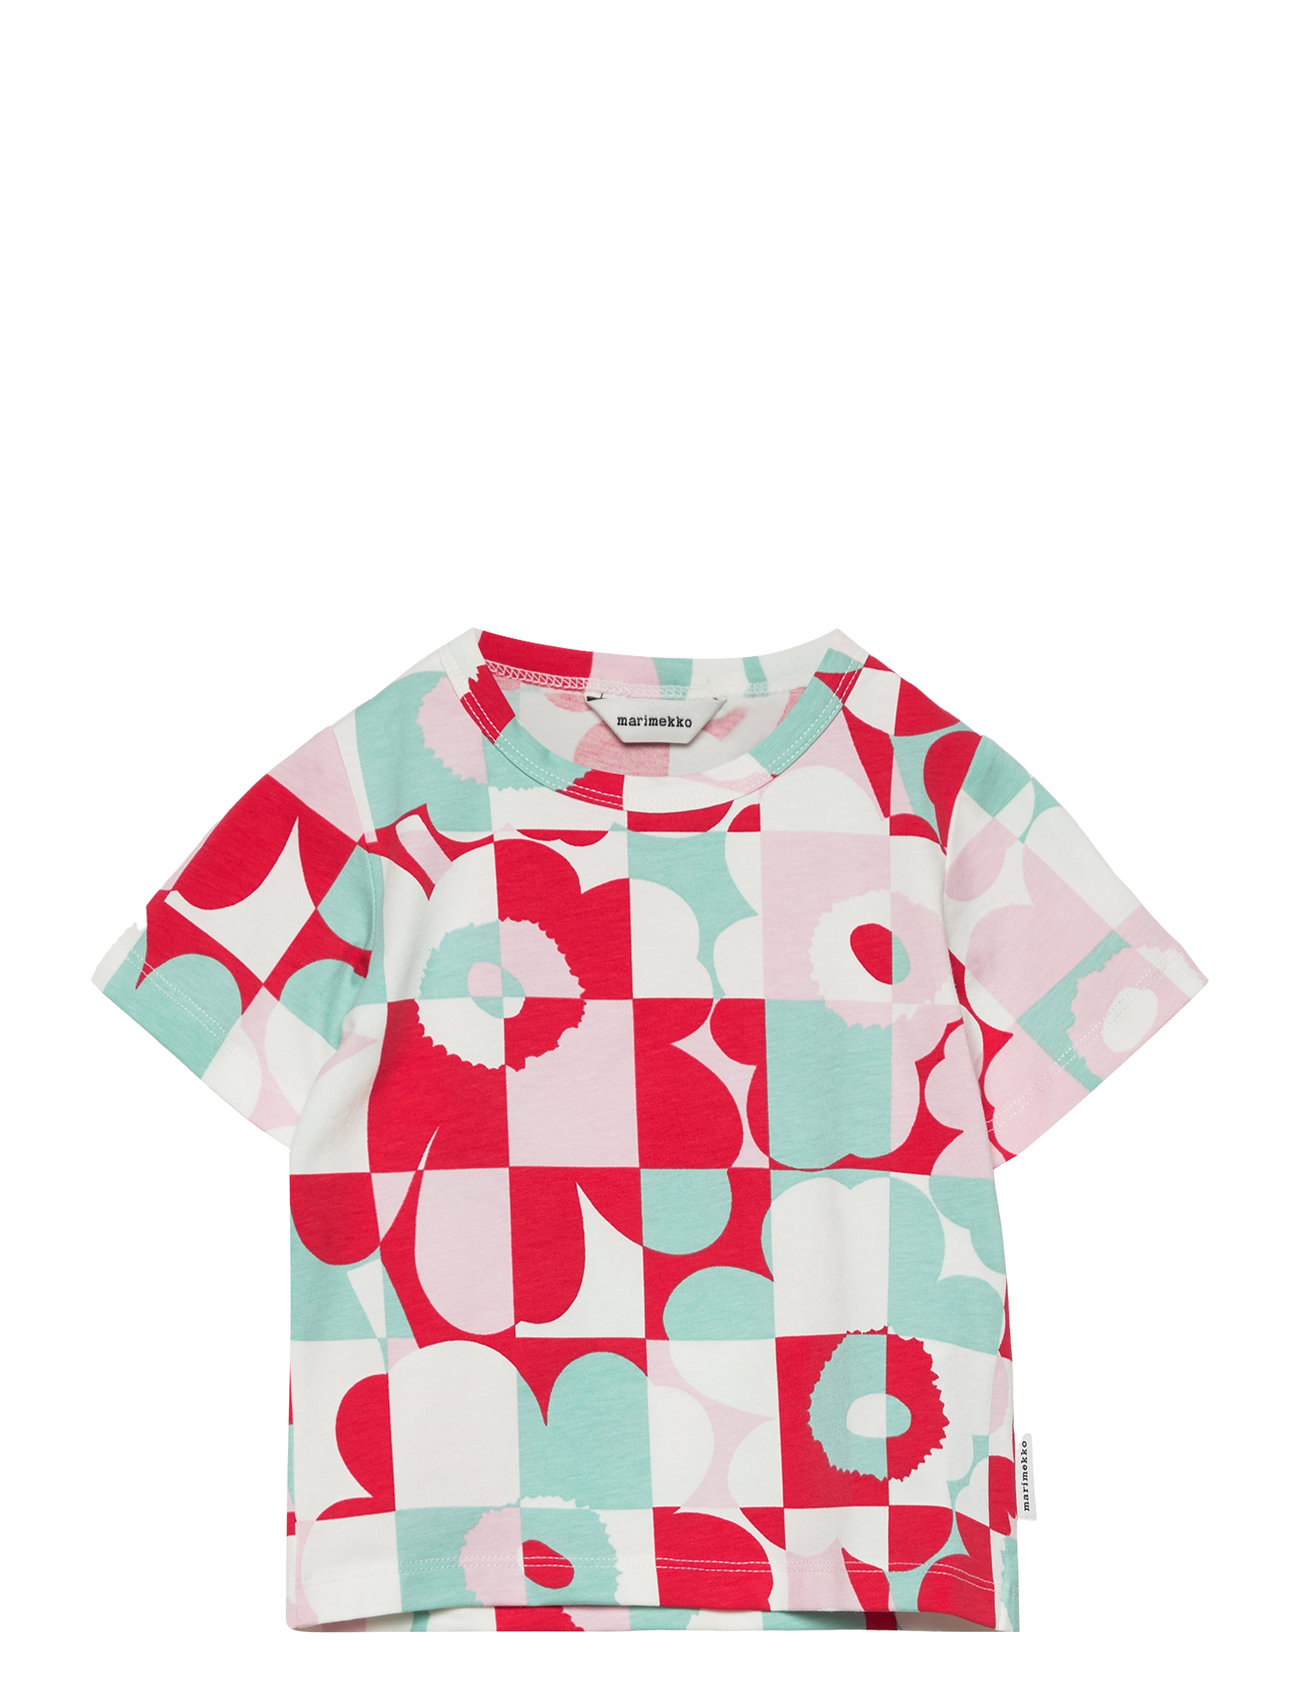 Soida Ruutu Unikko I Tops T-shirts Short-sleeved Multi/patterned Marimekko